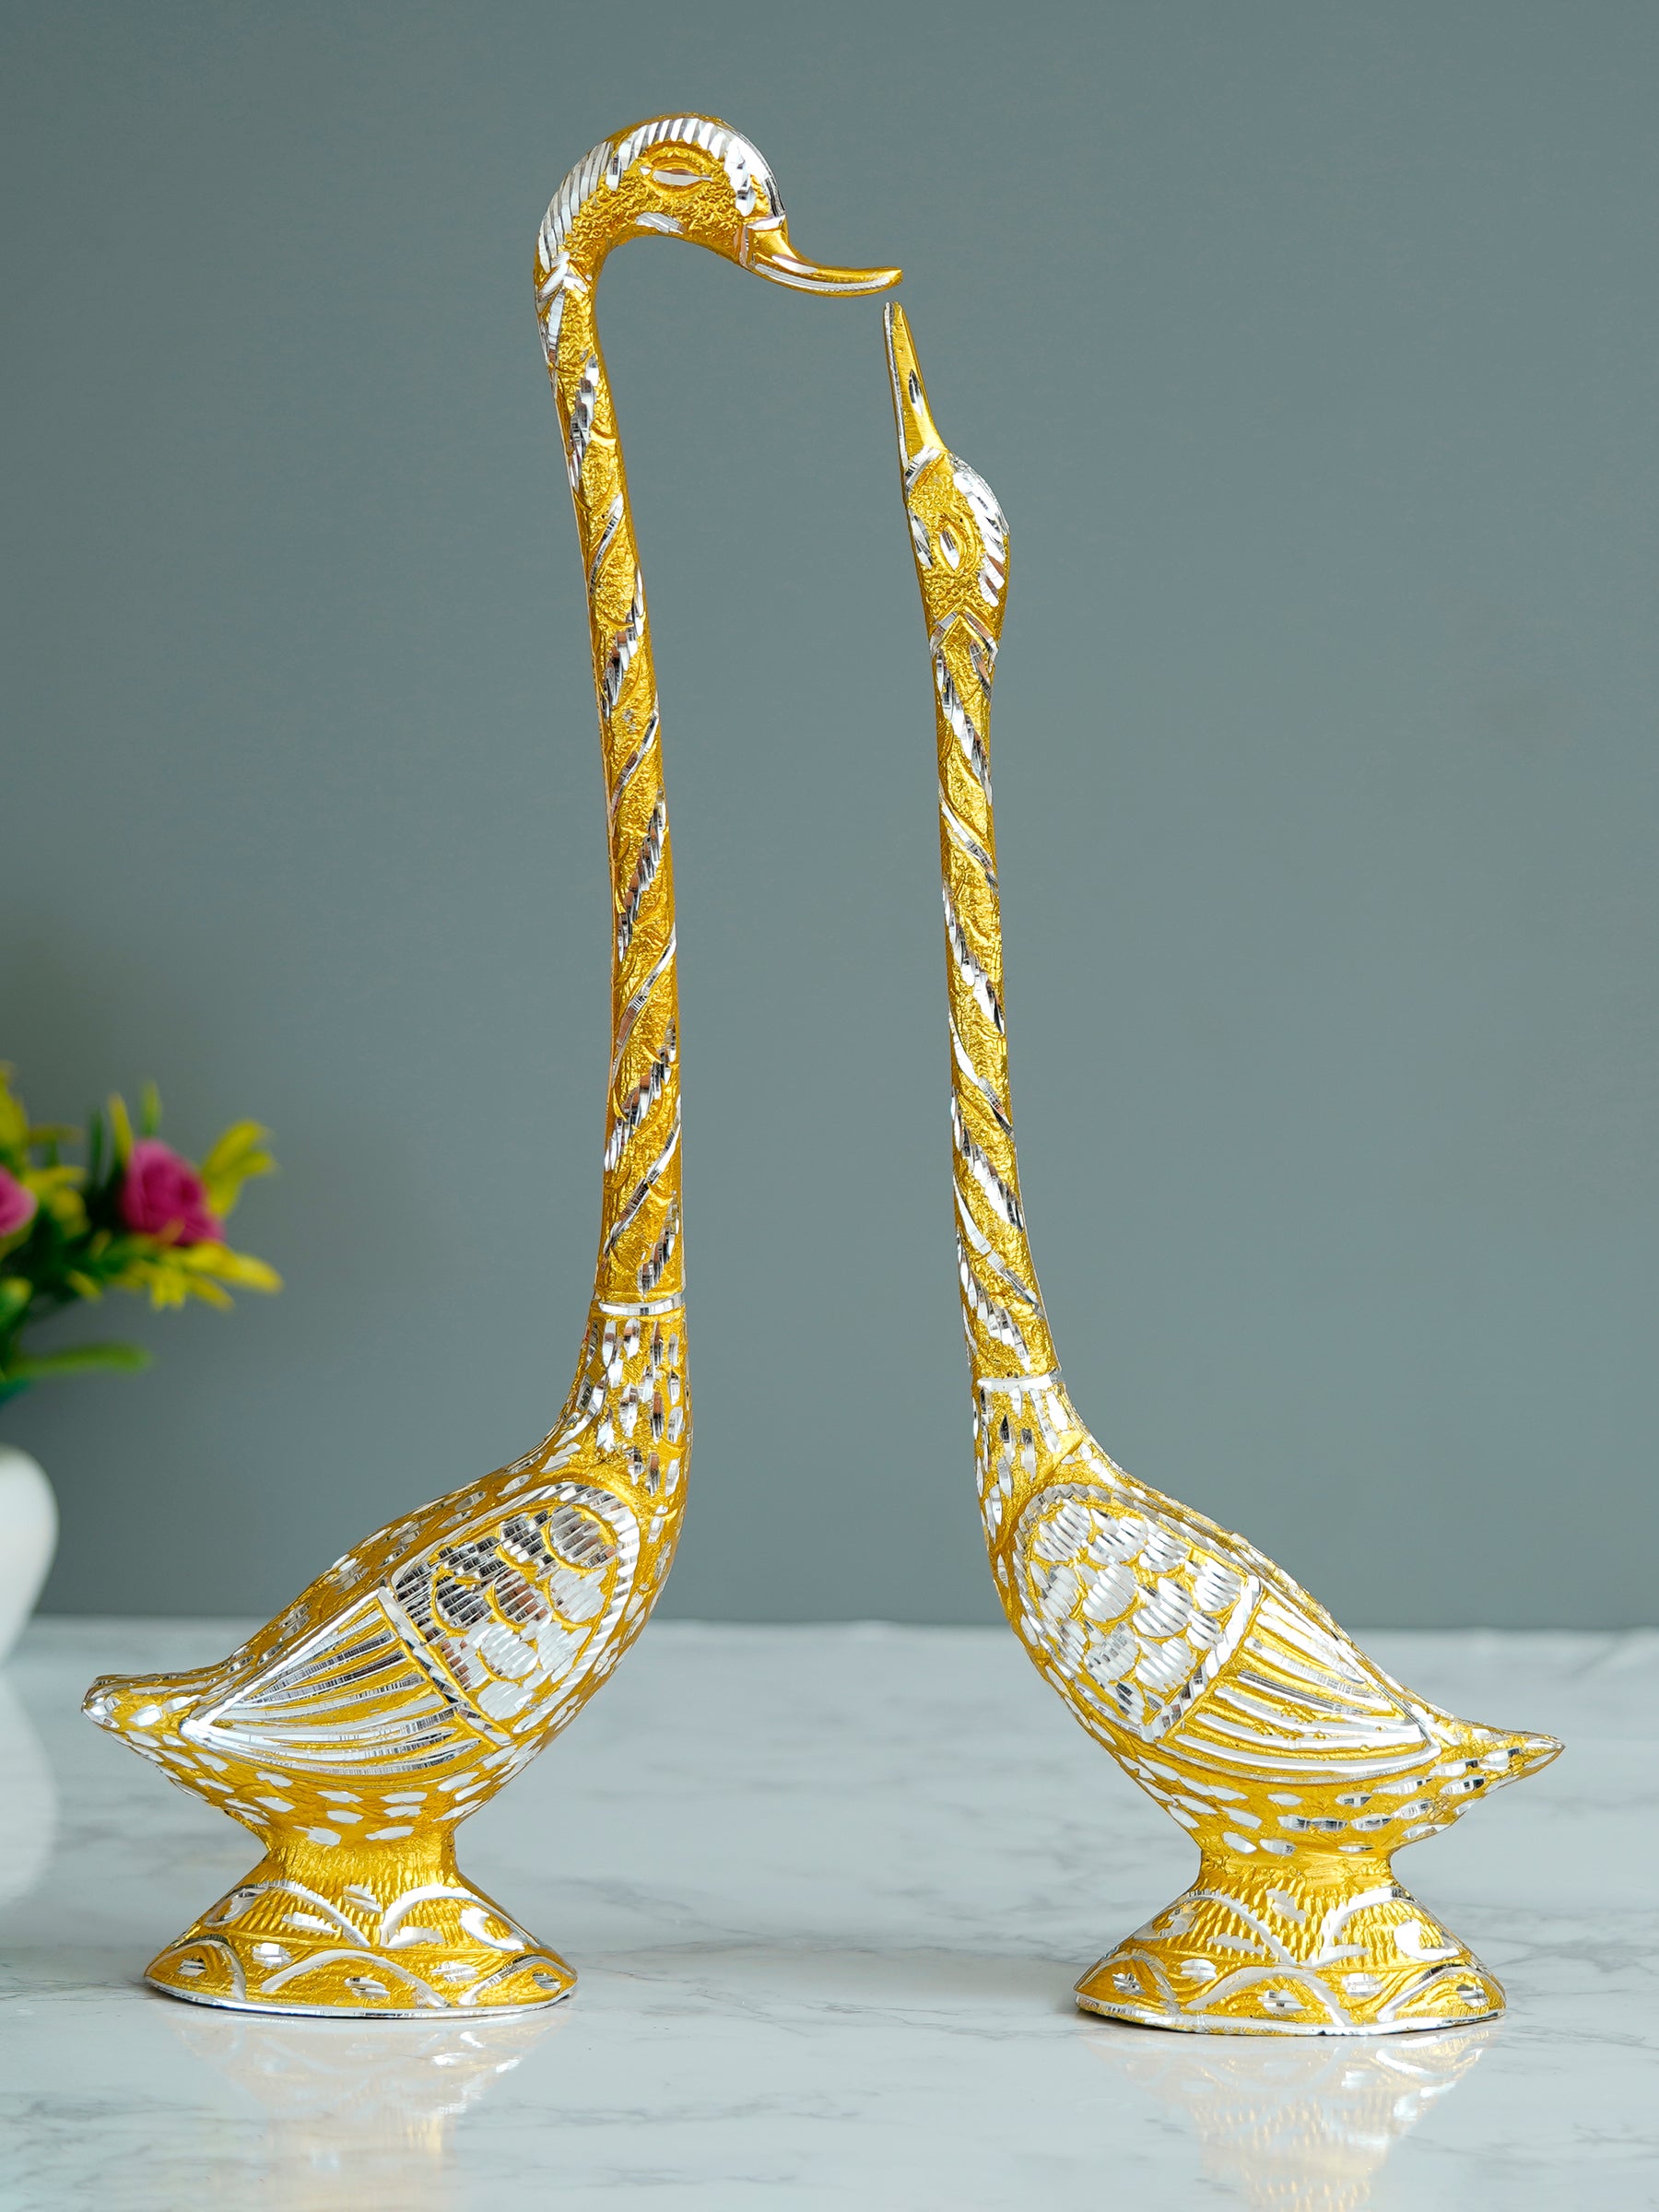 Golden Metal Kissing Swan Couple Handcrafted Decorative showpiece Love Bird Figurines 1